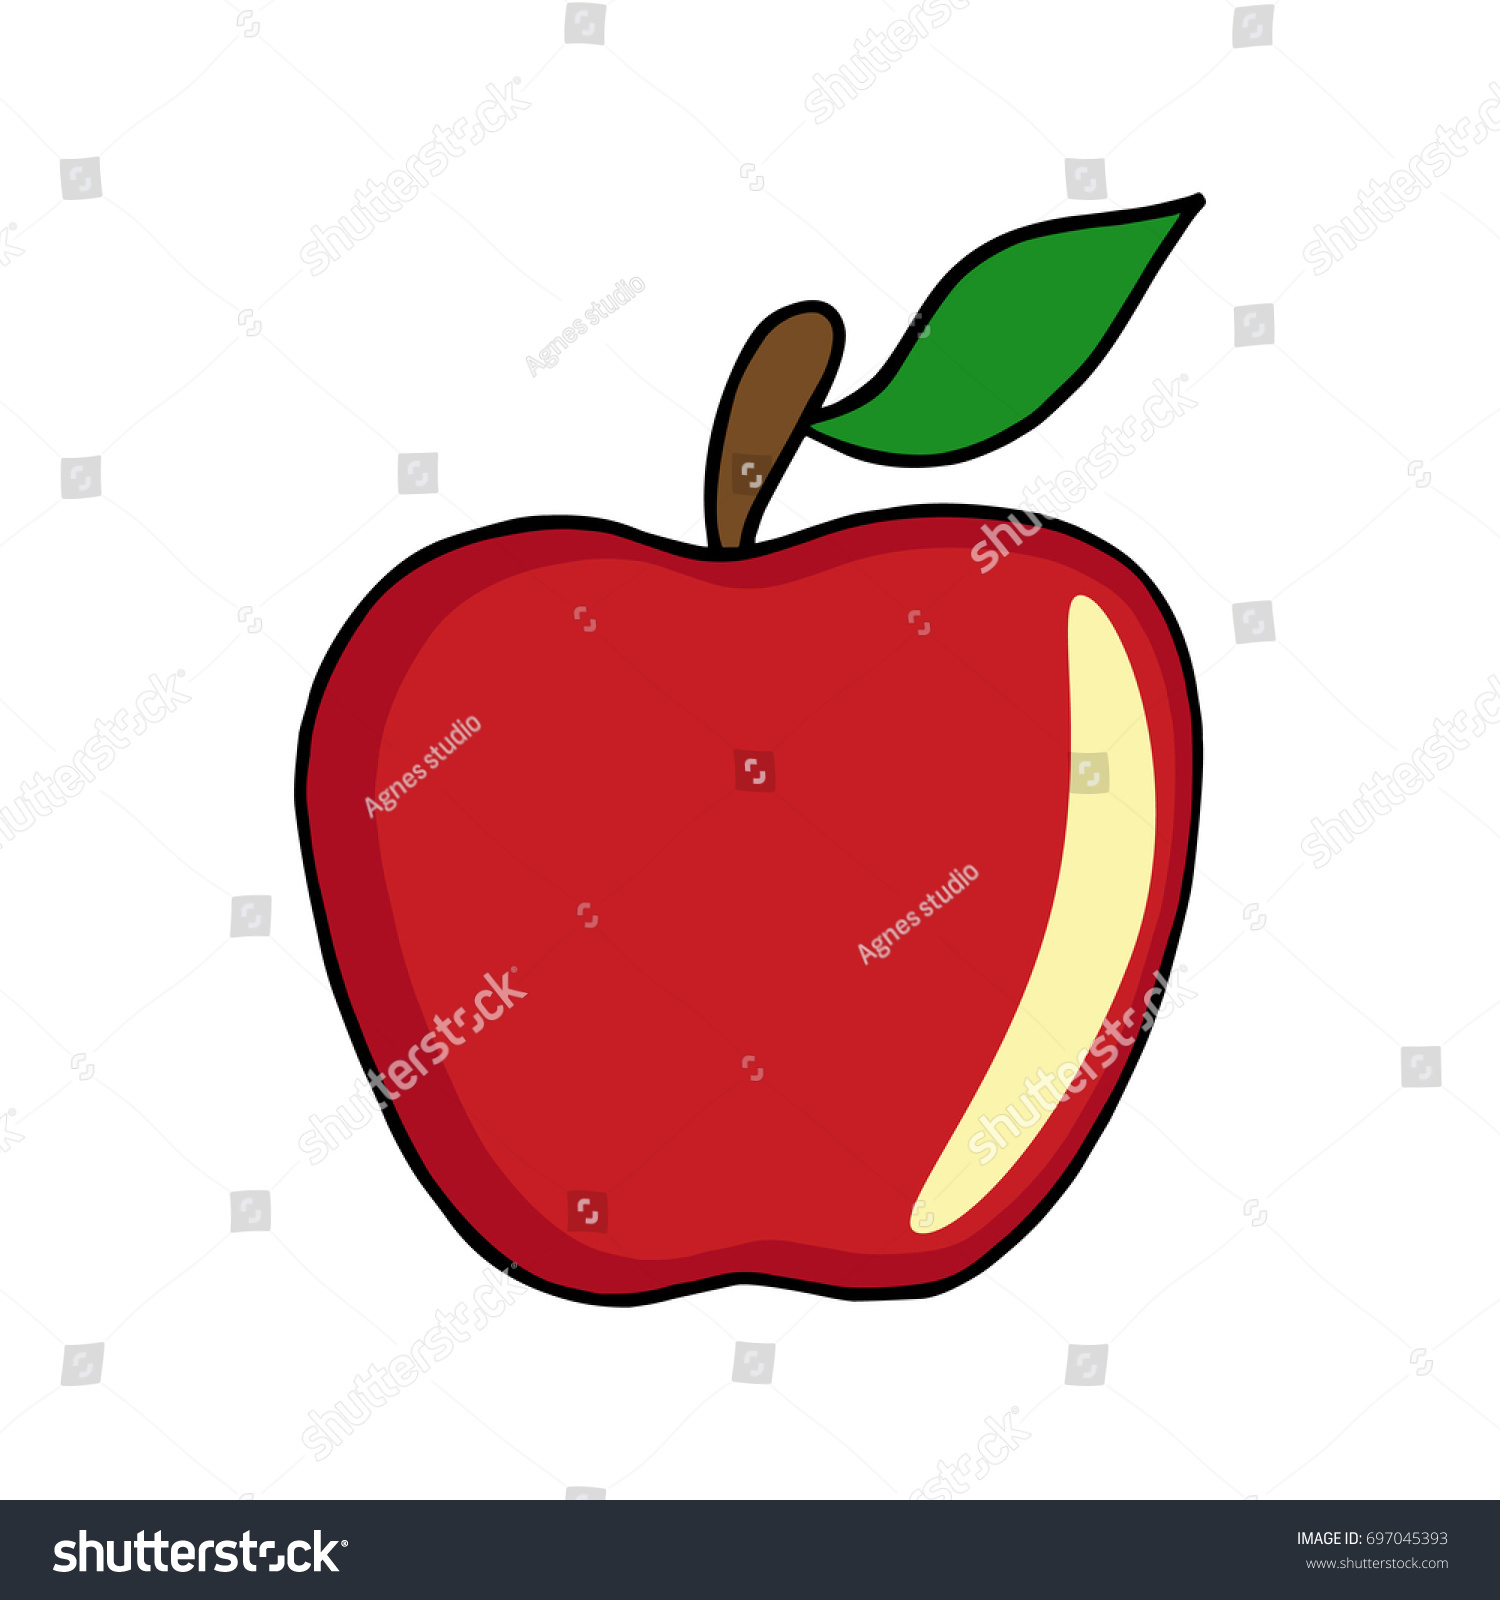 Red Apple Illustration Vector On White Stock Vector 697045393 ...